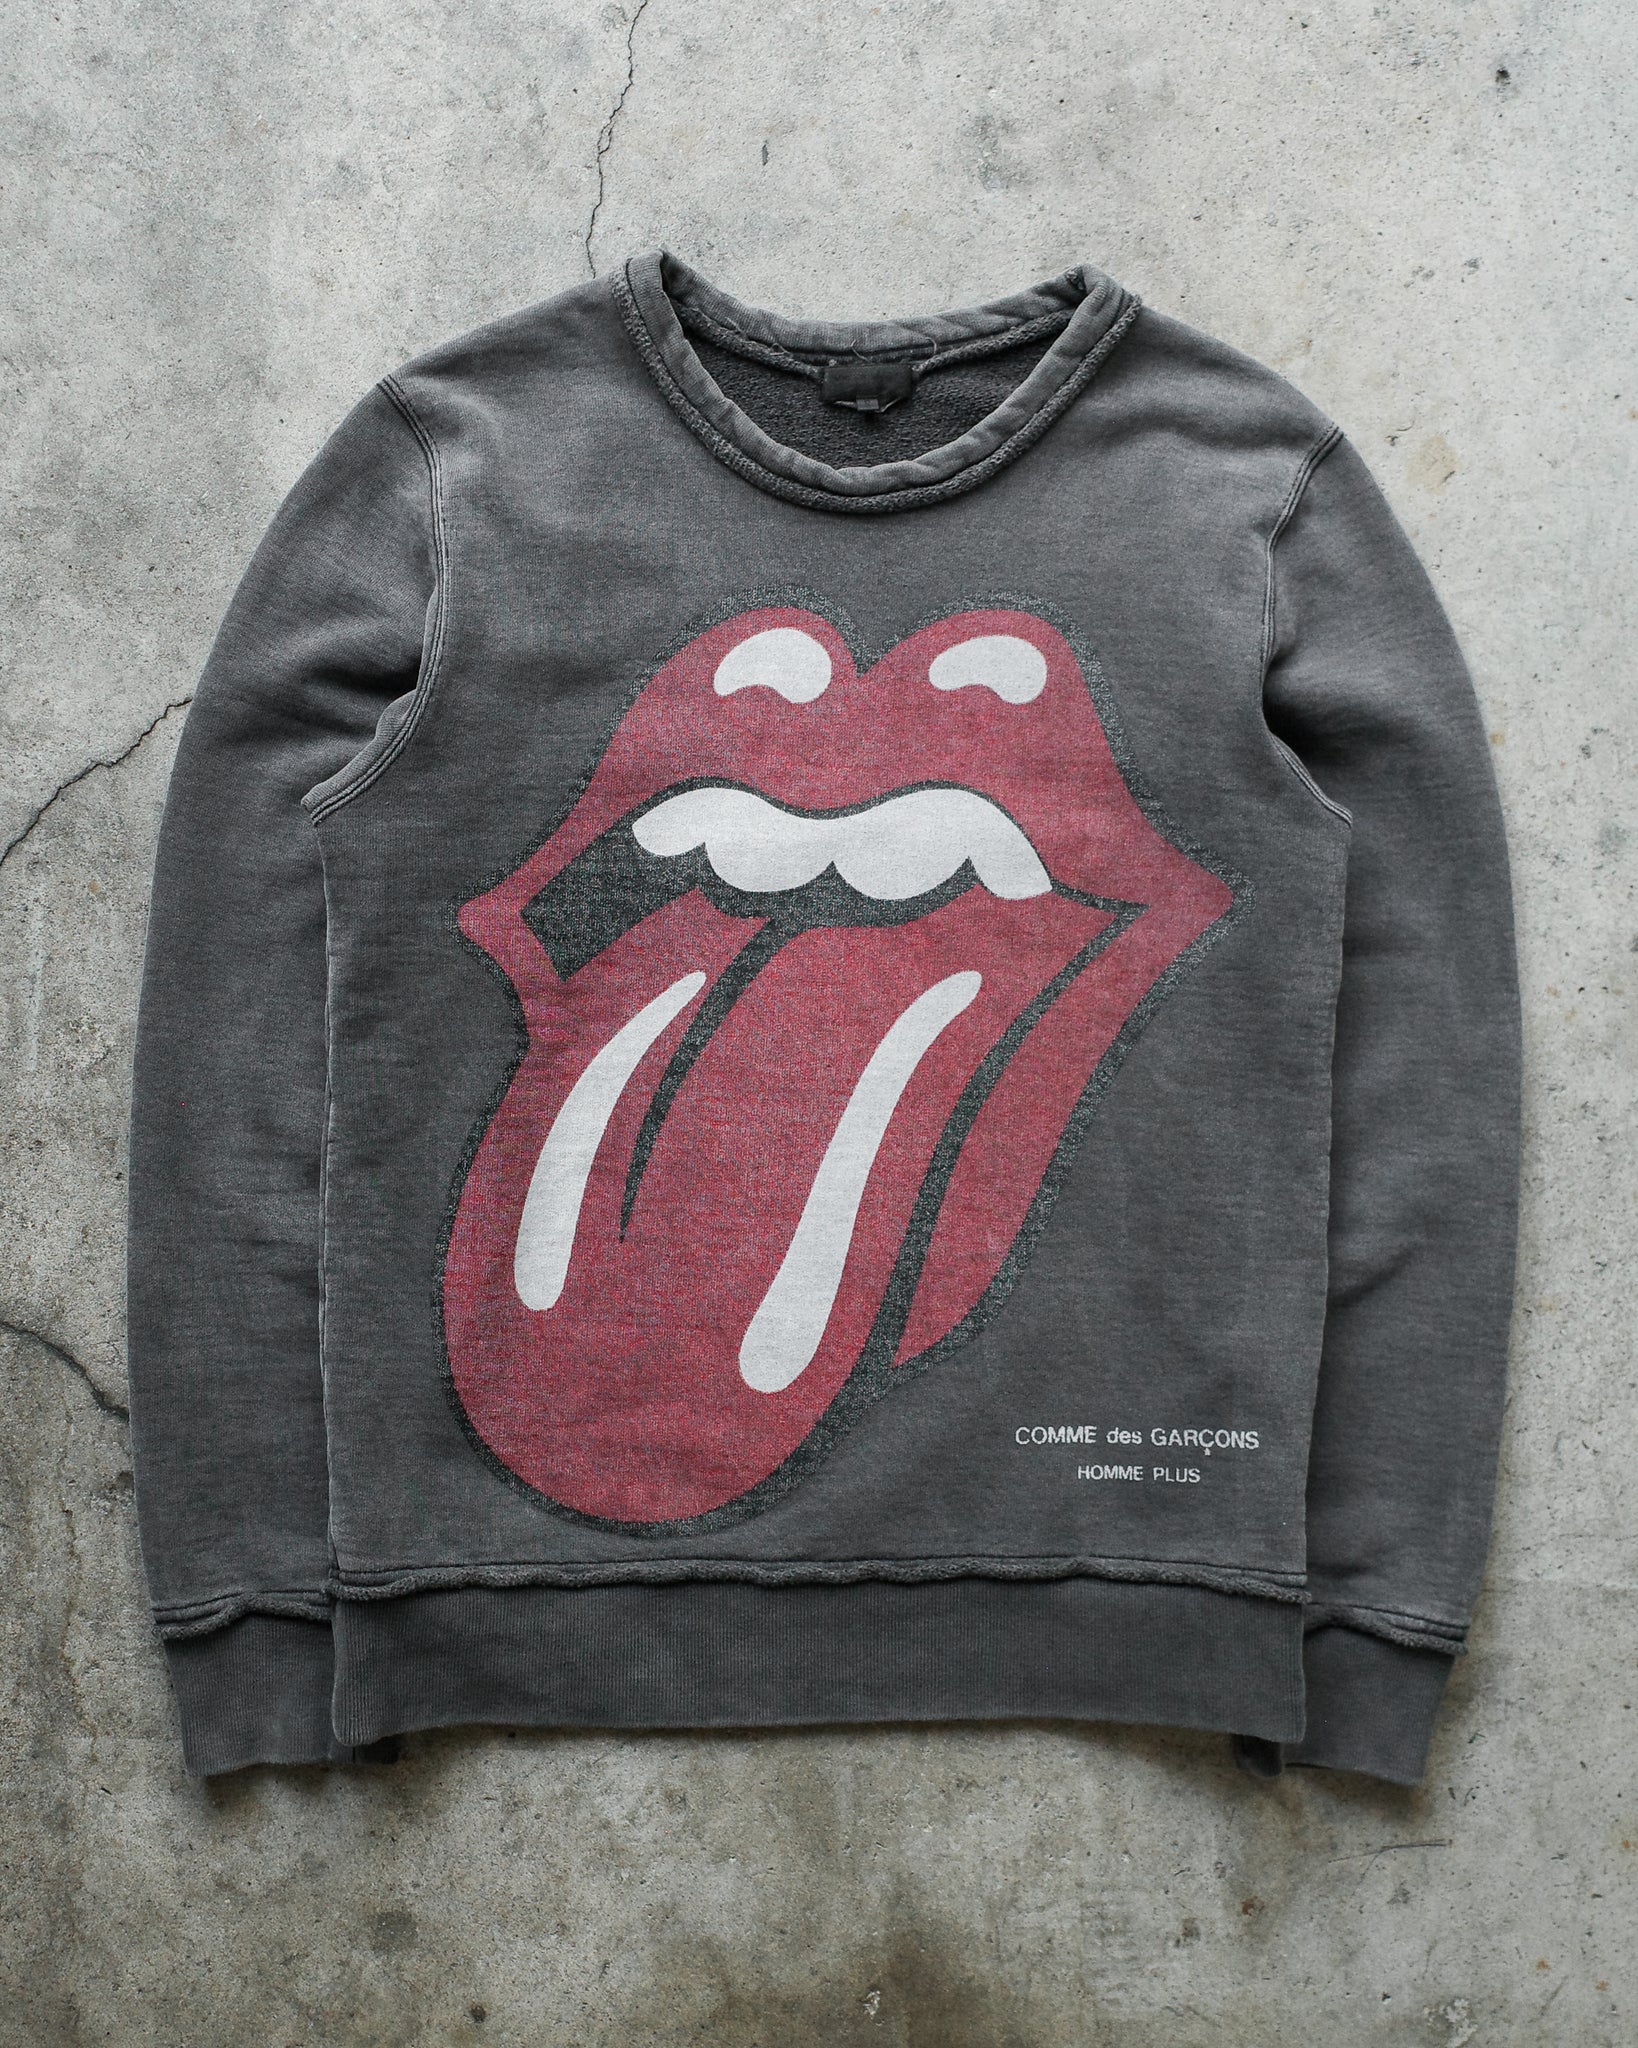 Comme Des Garçons SS06 Rolling Stones Sweatshirt